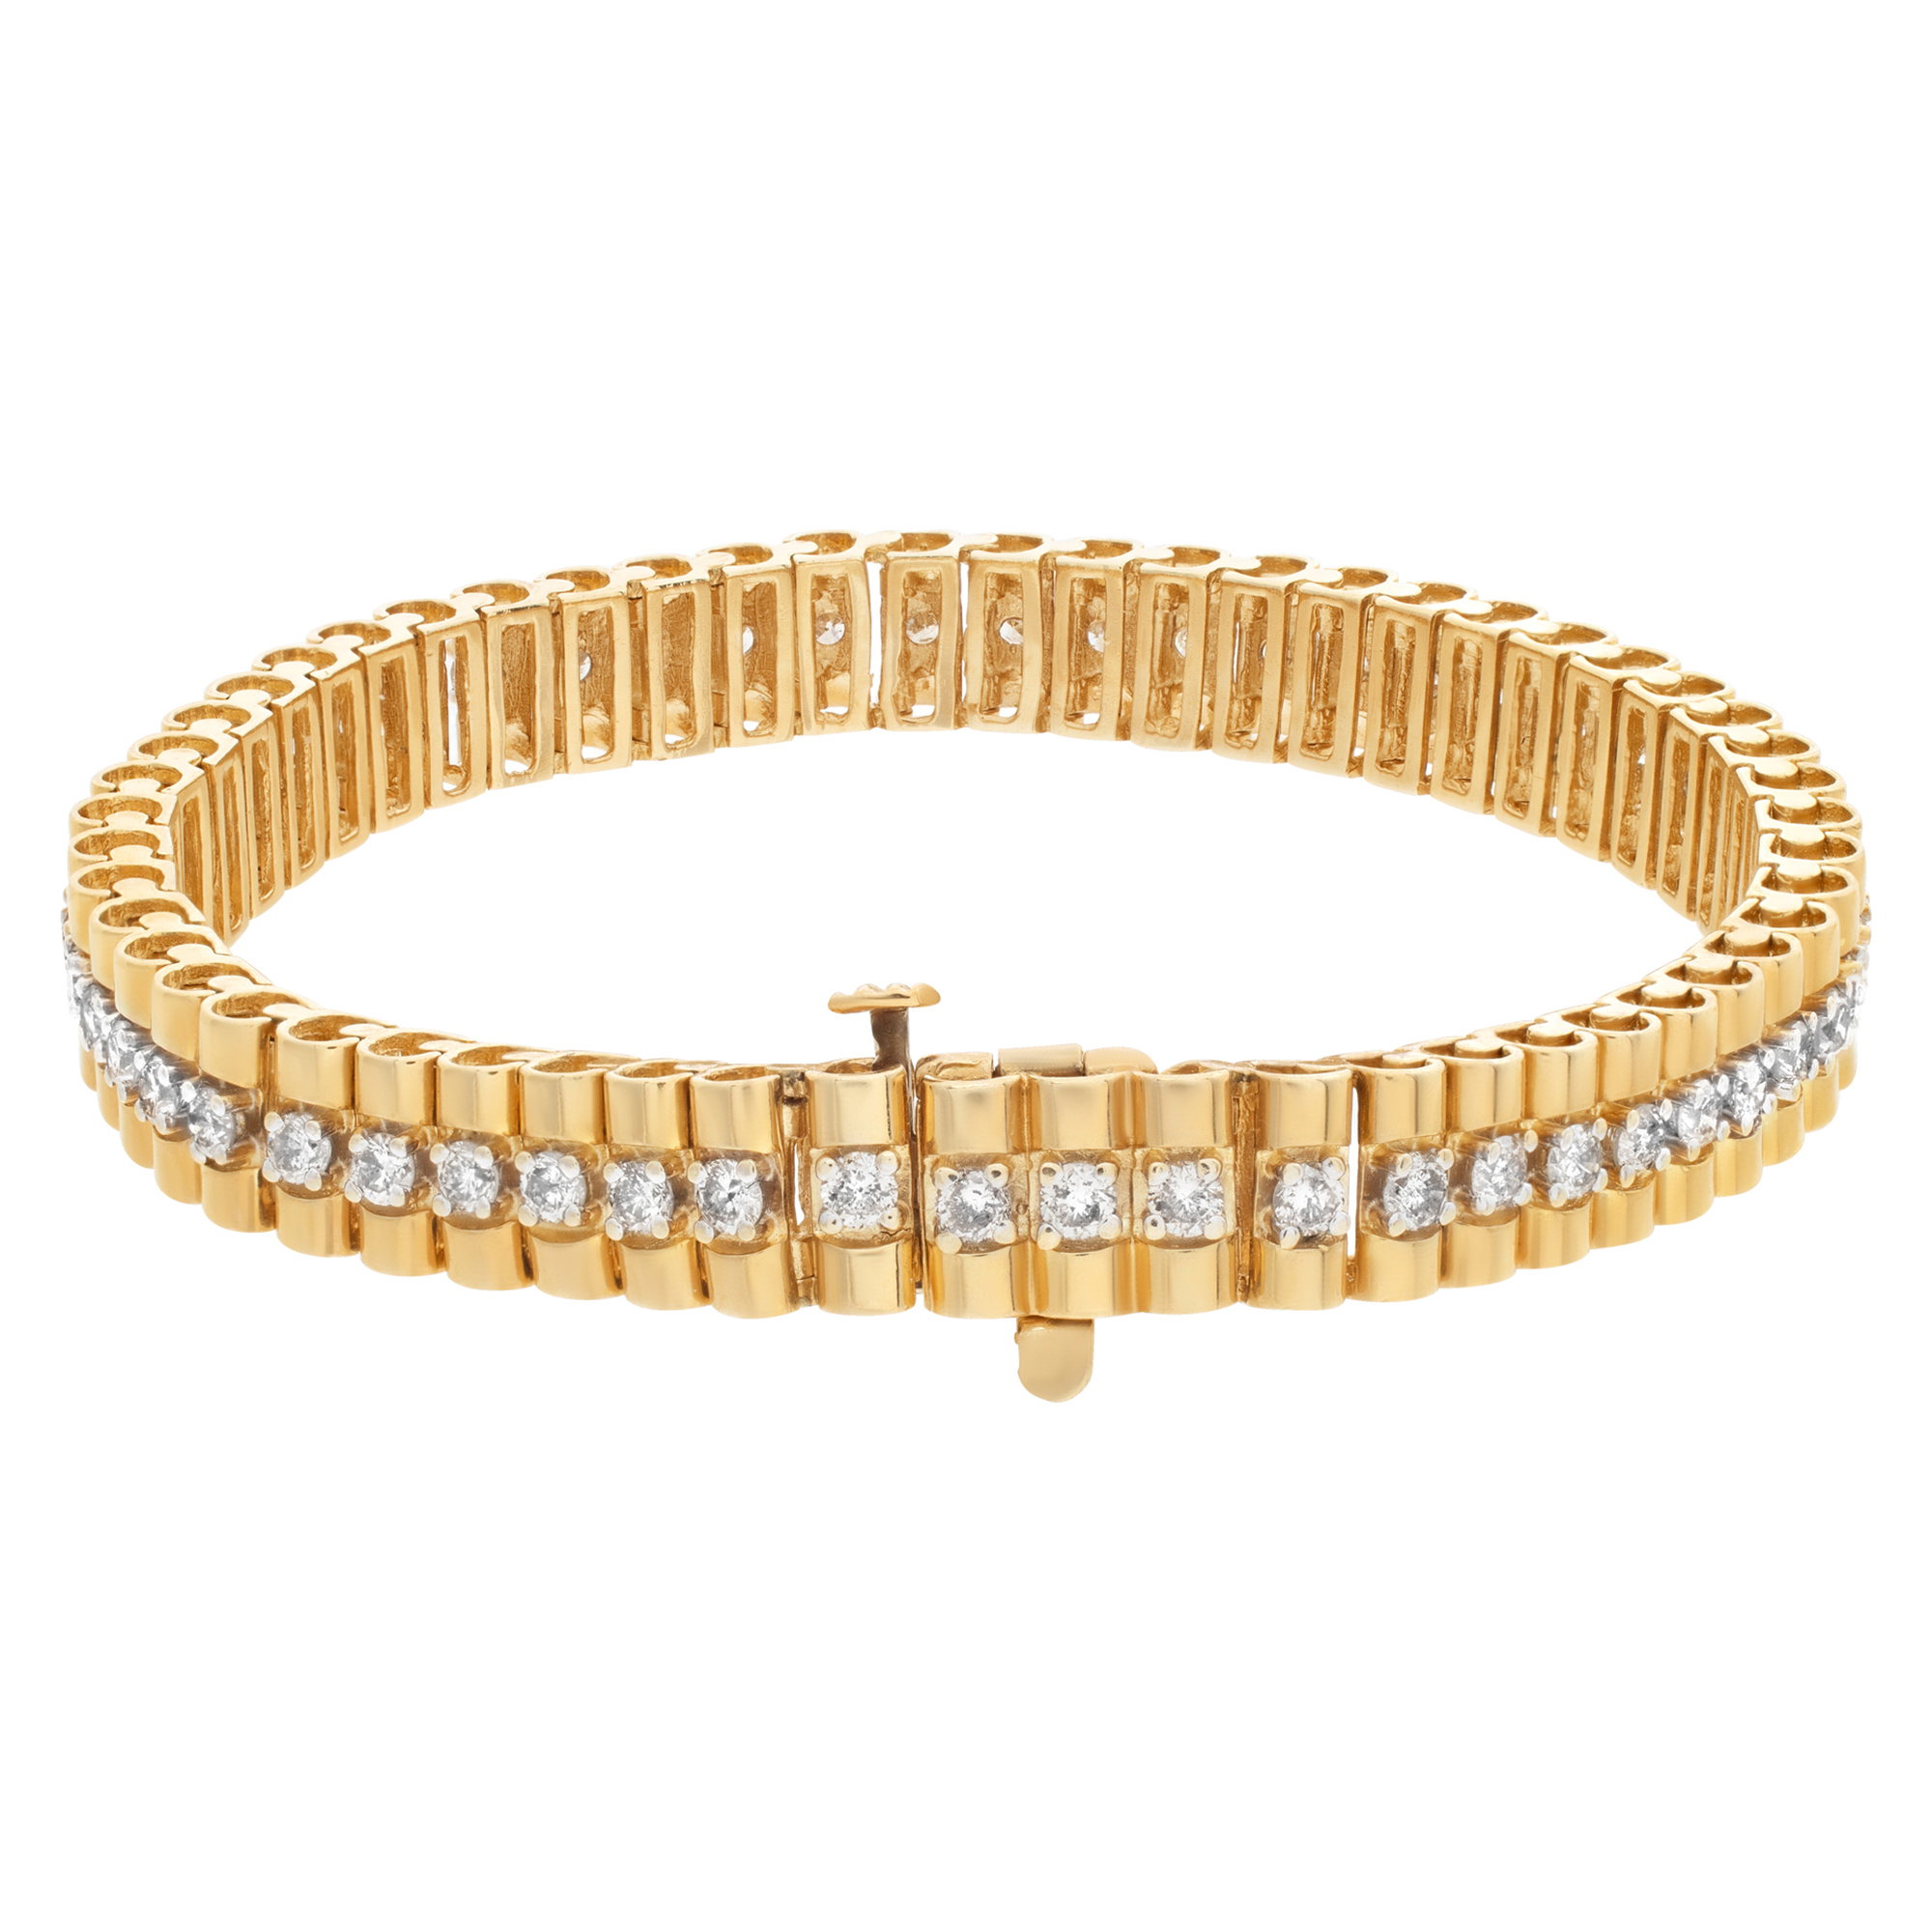 Stylish president style link bracelet with approximately 3 carats full cut round brilliant diamonds set in 14k yellow gold image 3